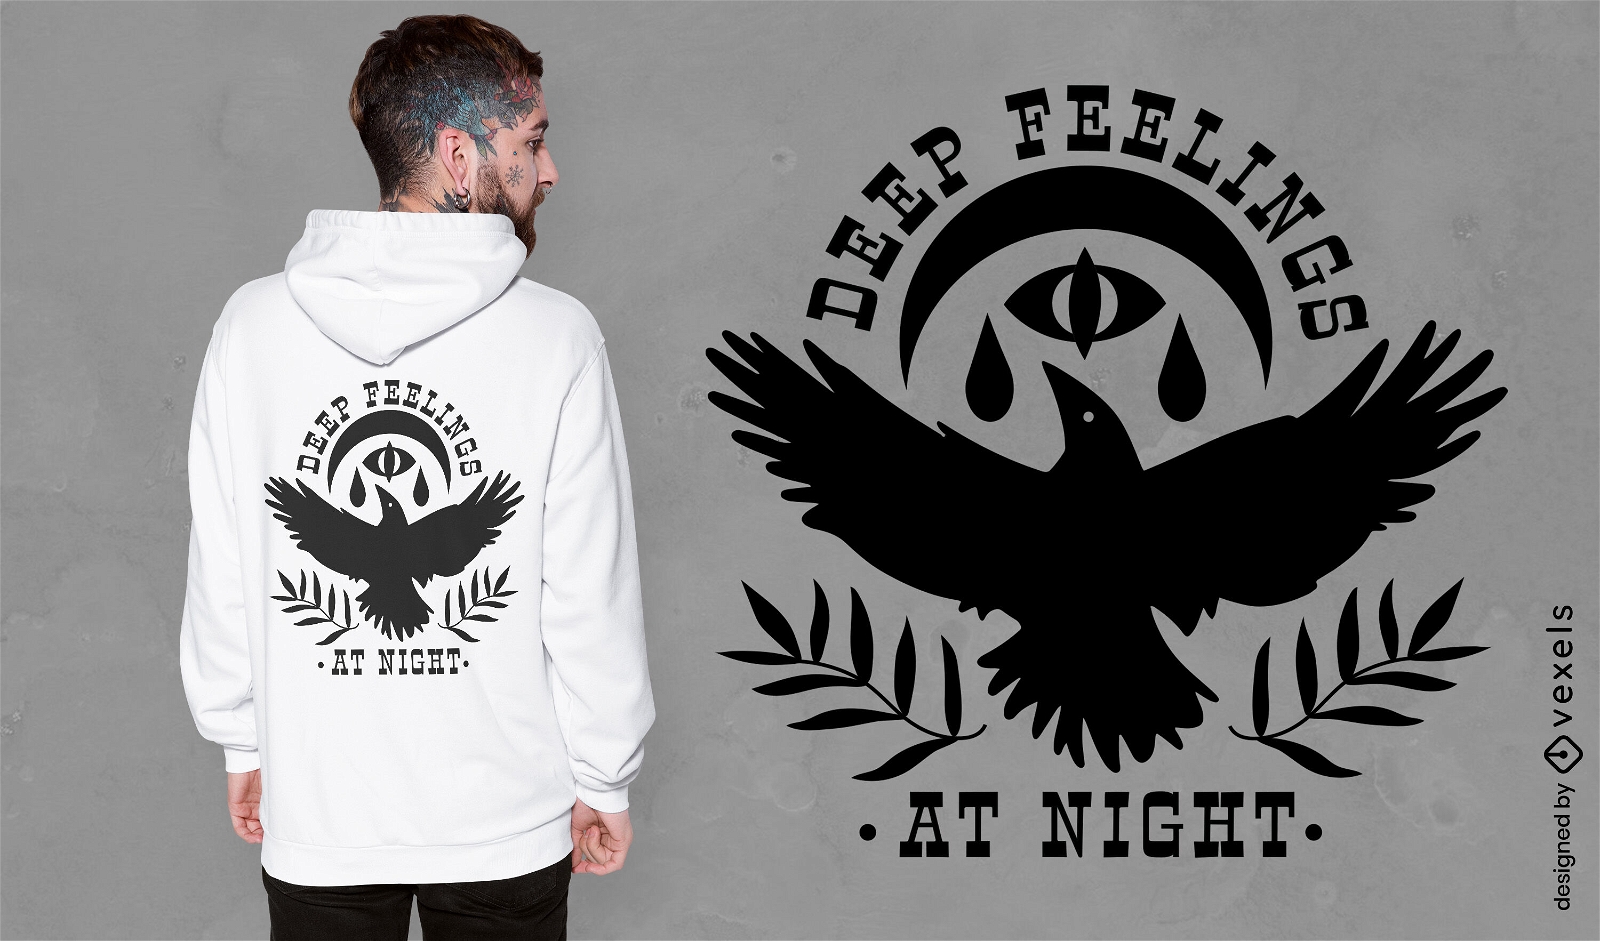 Deep feelings at night crow t-shirt design